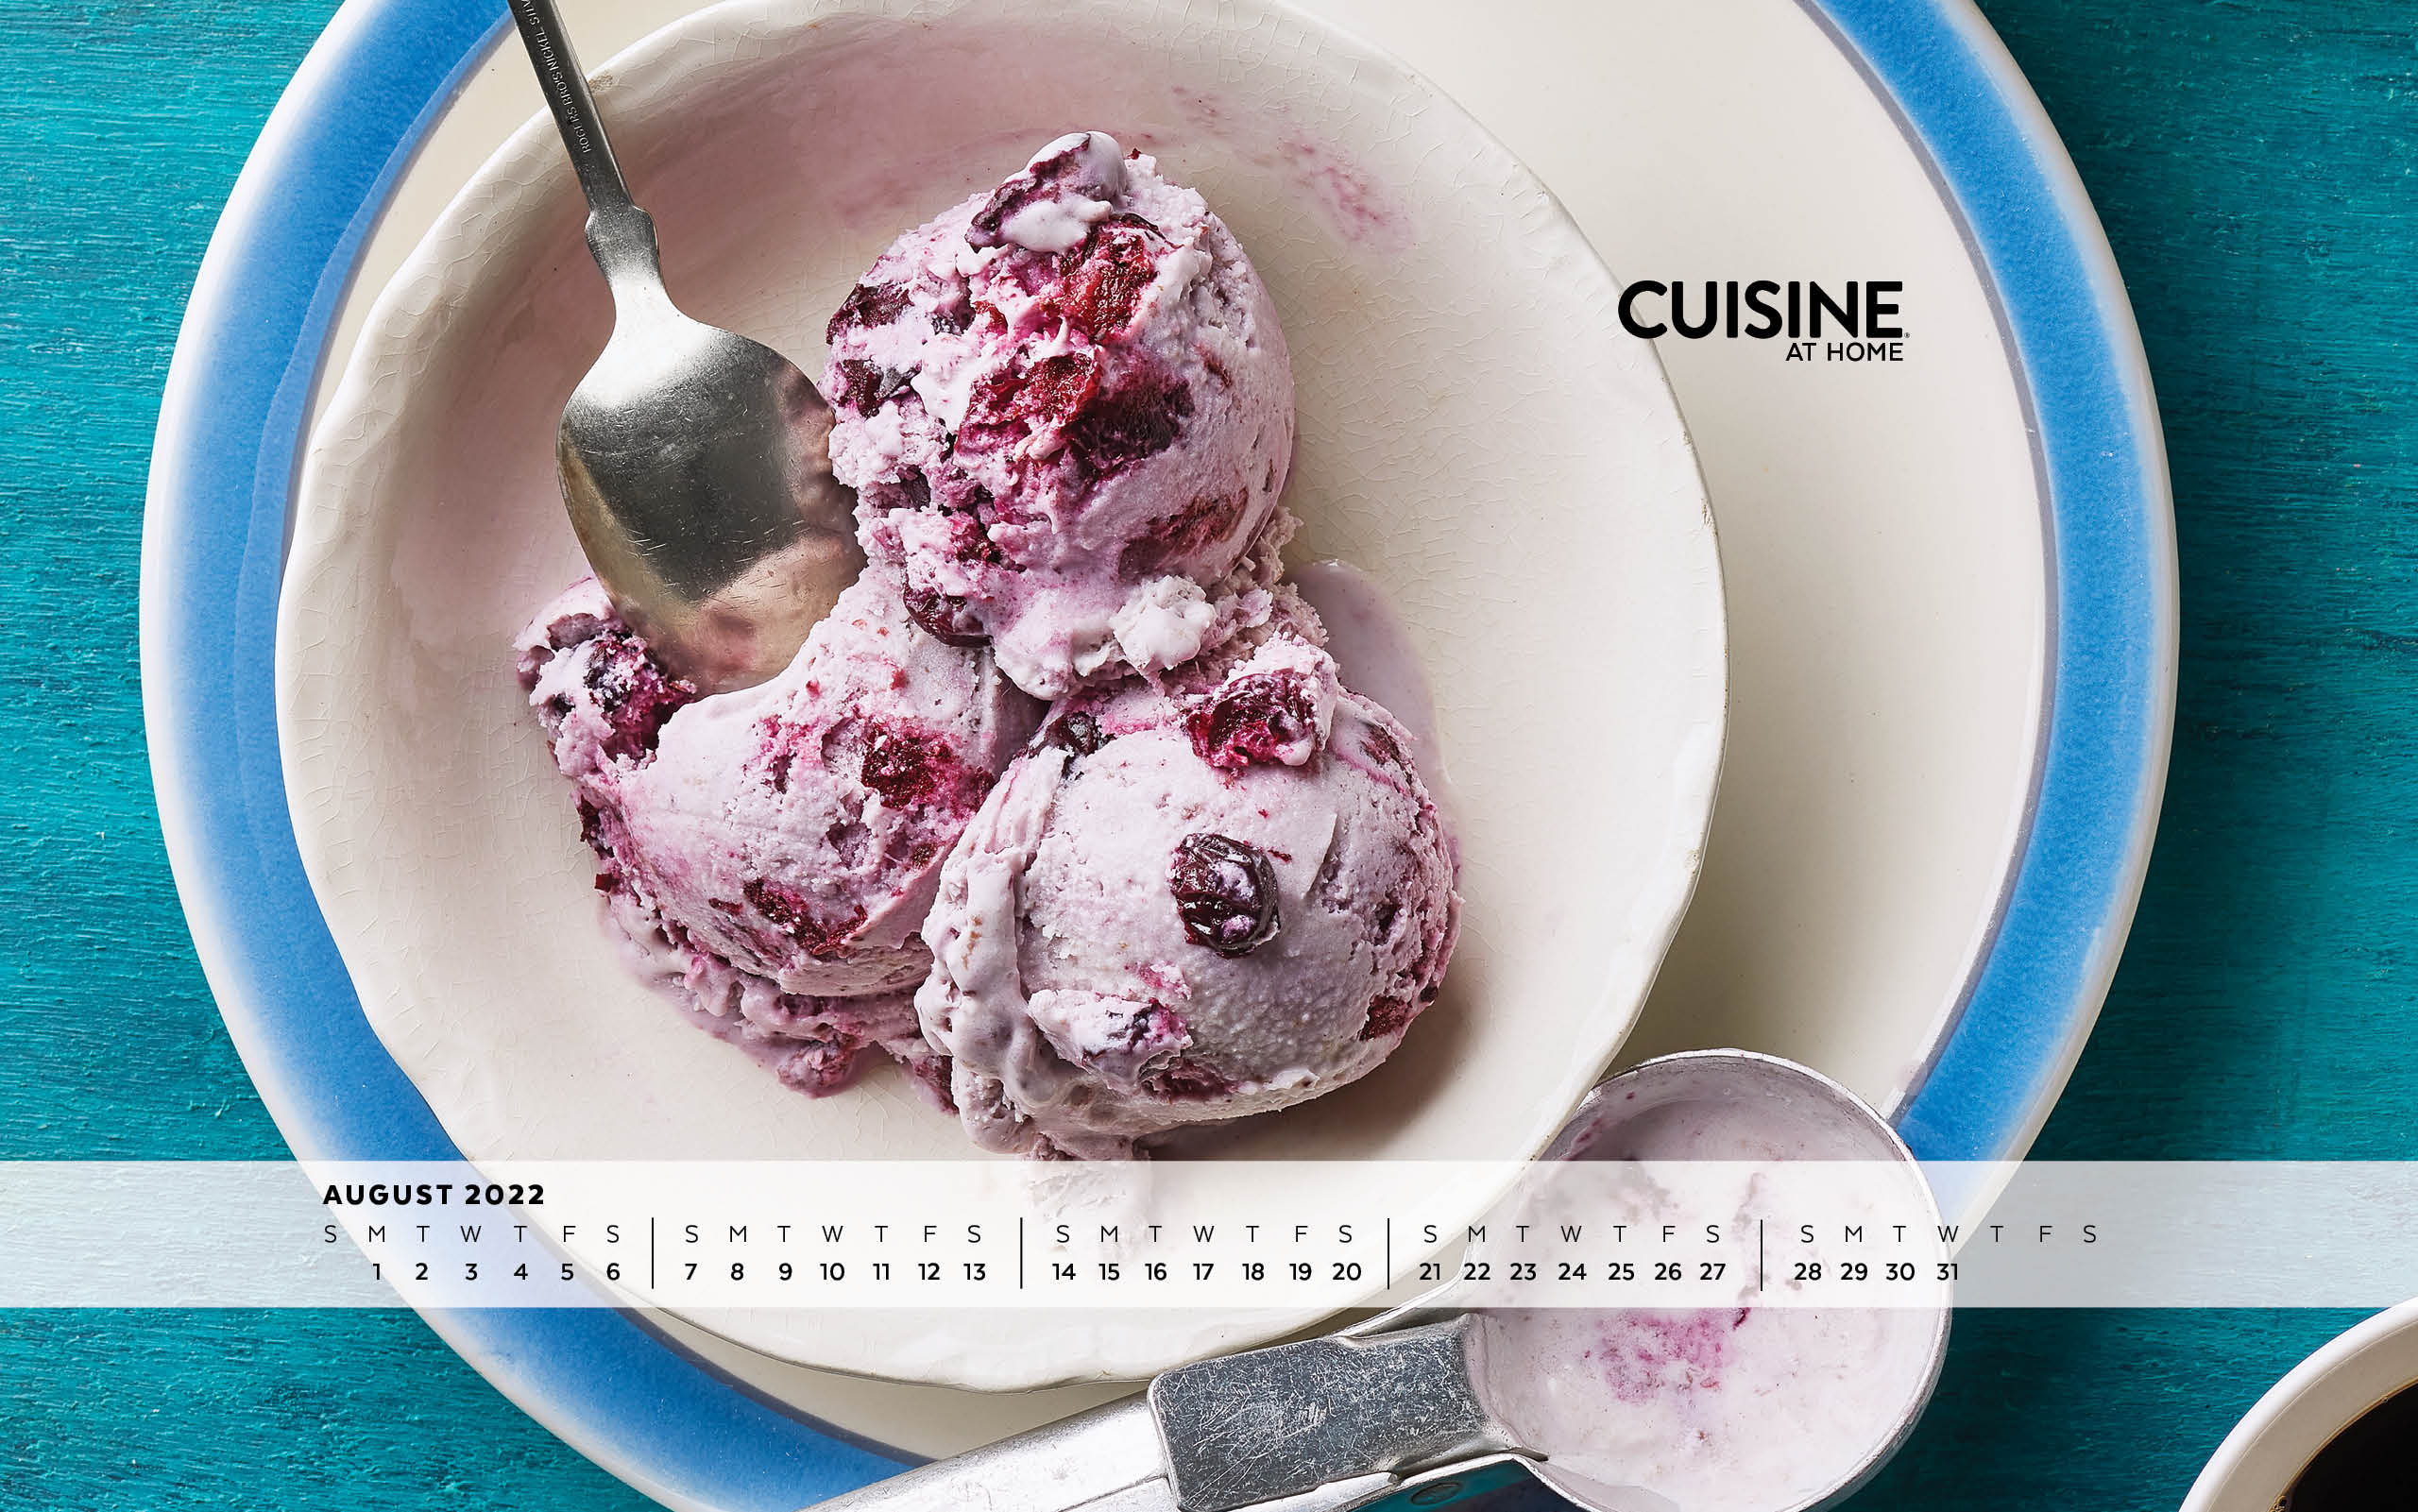 Free Desktop Wallpaper with calendar Windows Mac - August 2022 - Cuisine at Home - Summer aesthetic food cooking ice cream blueberry homemade dessert